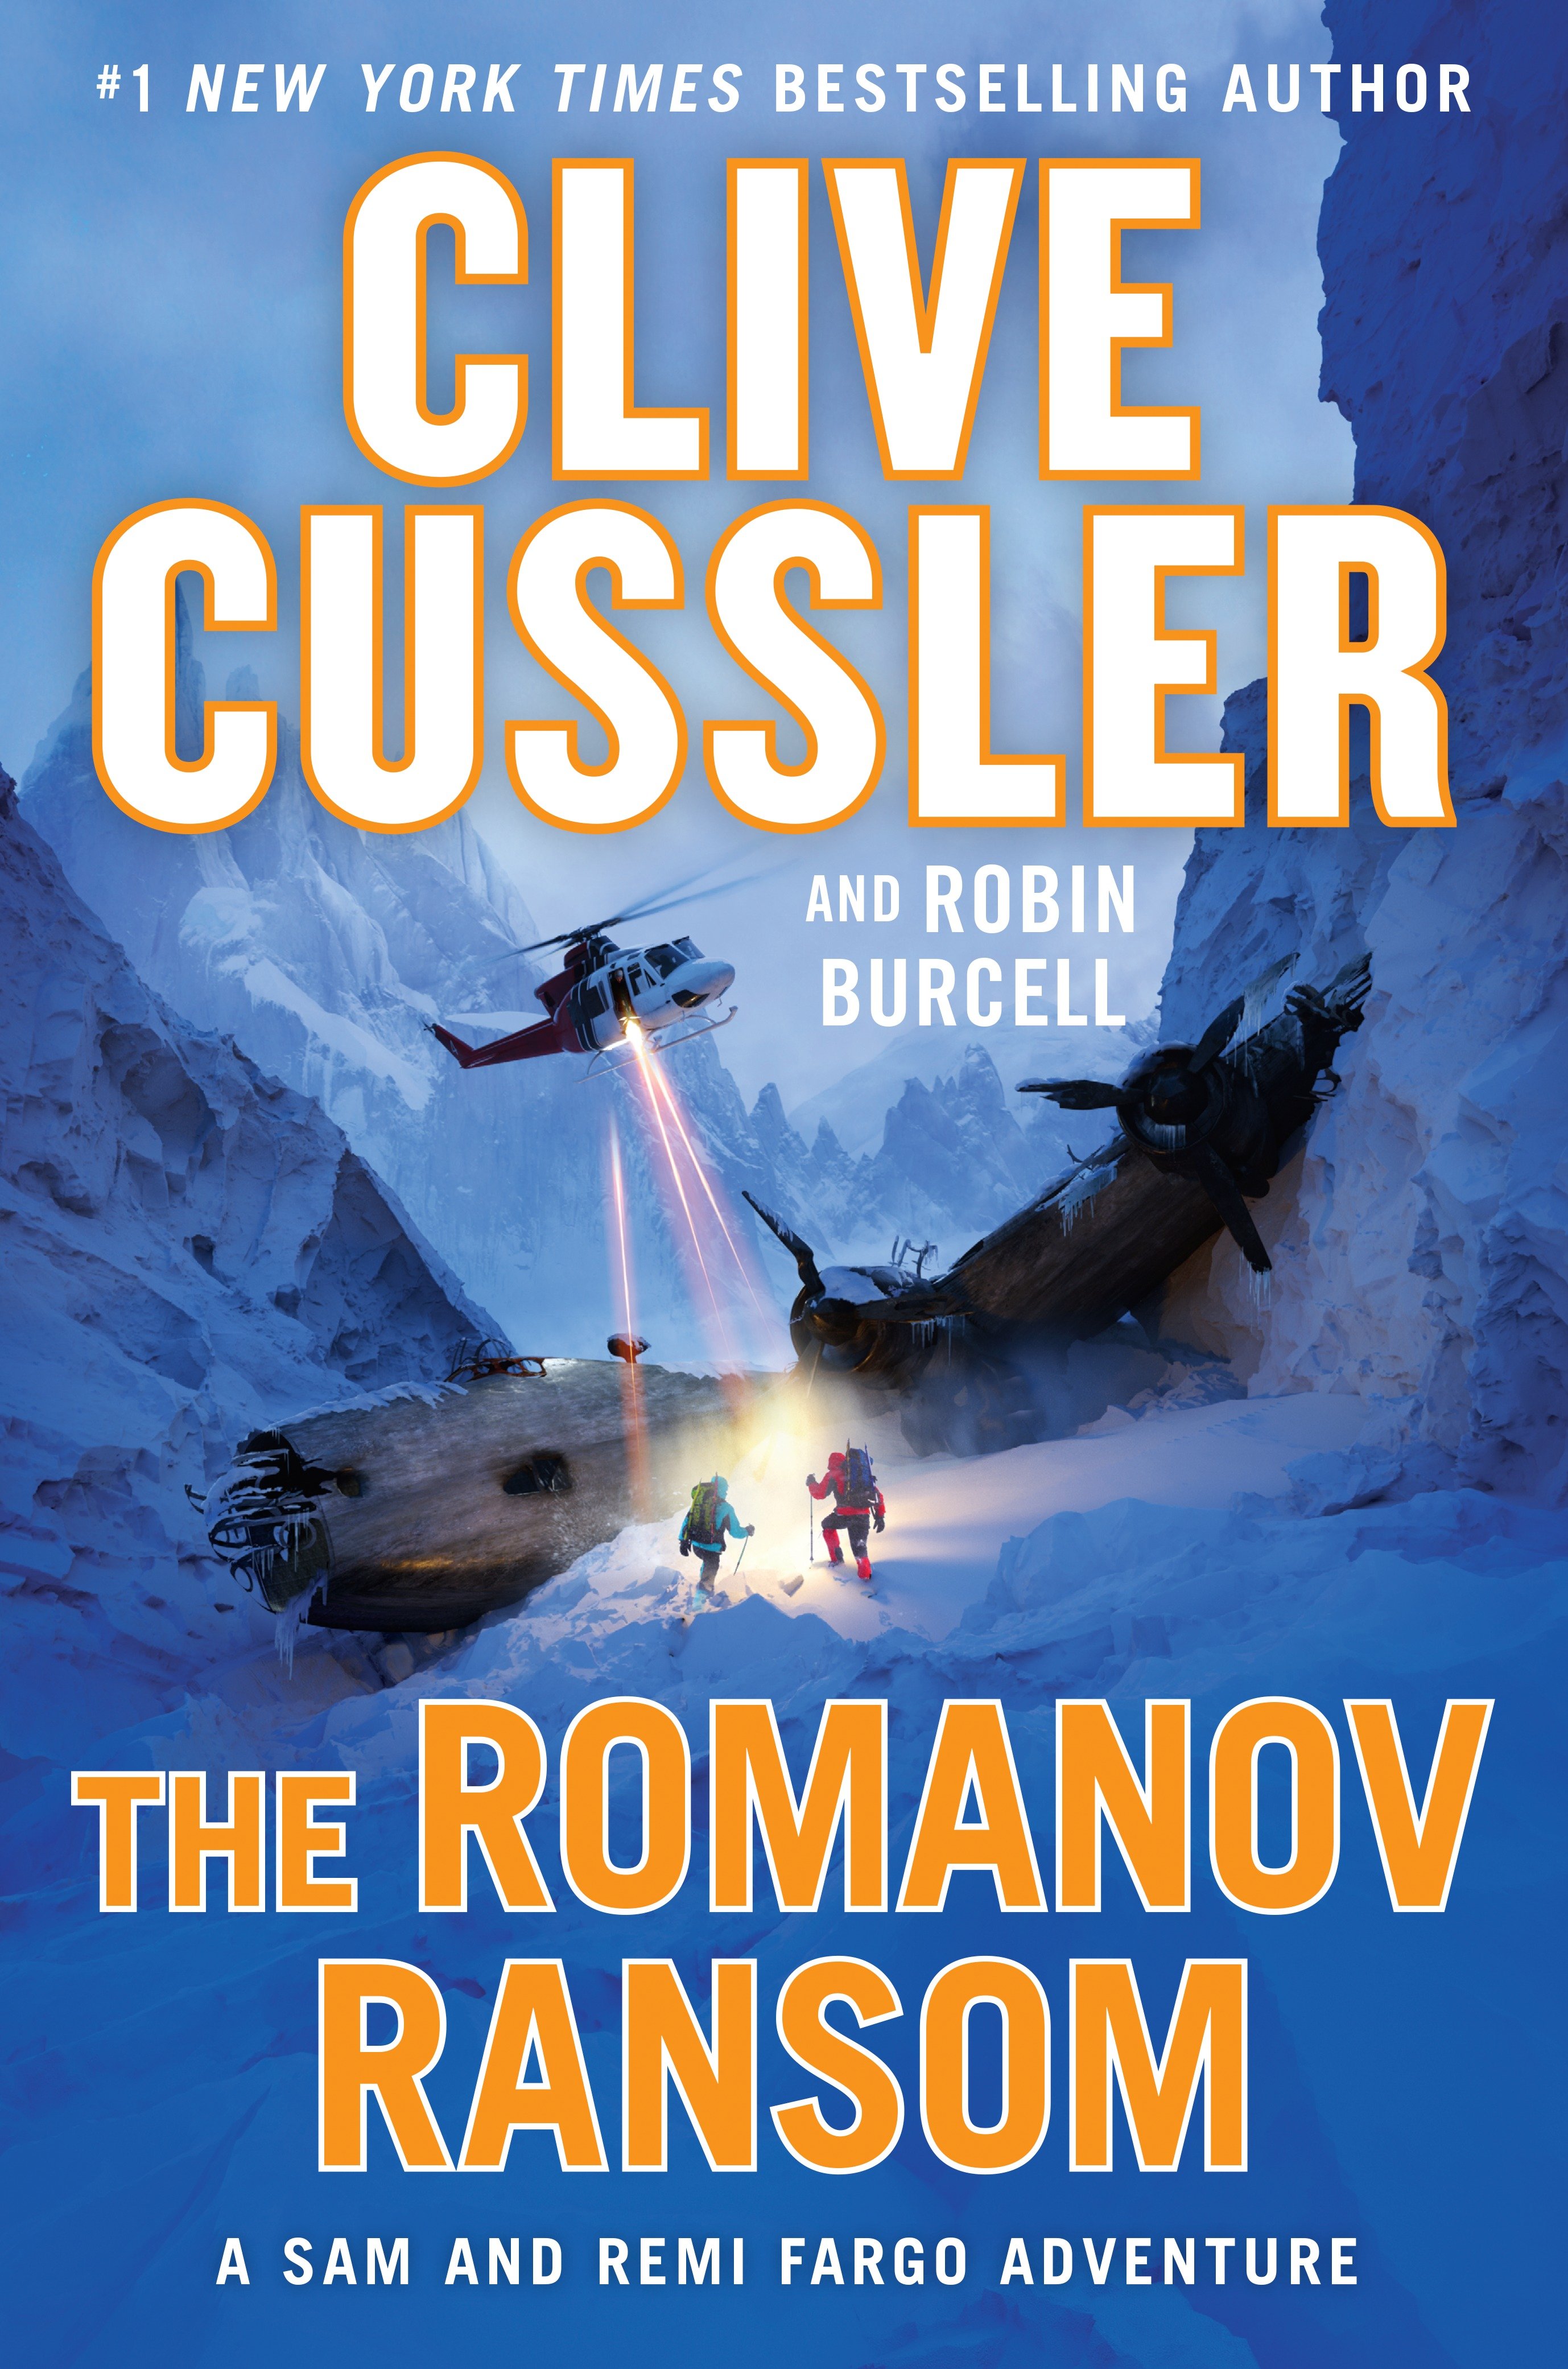 The Romanov ransom cover image